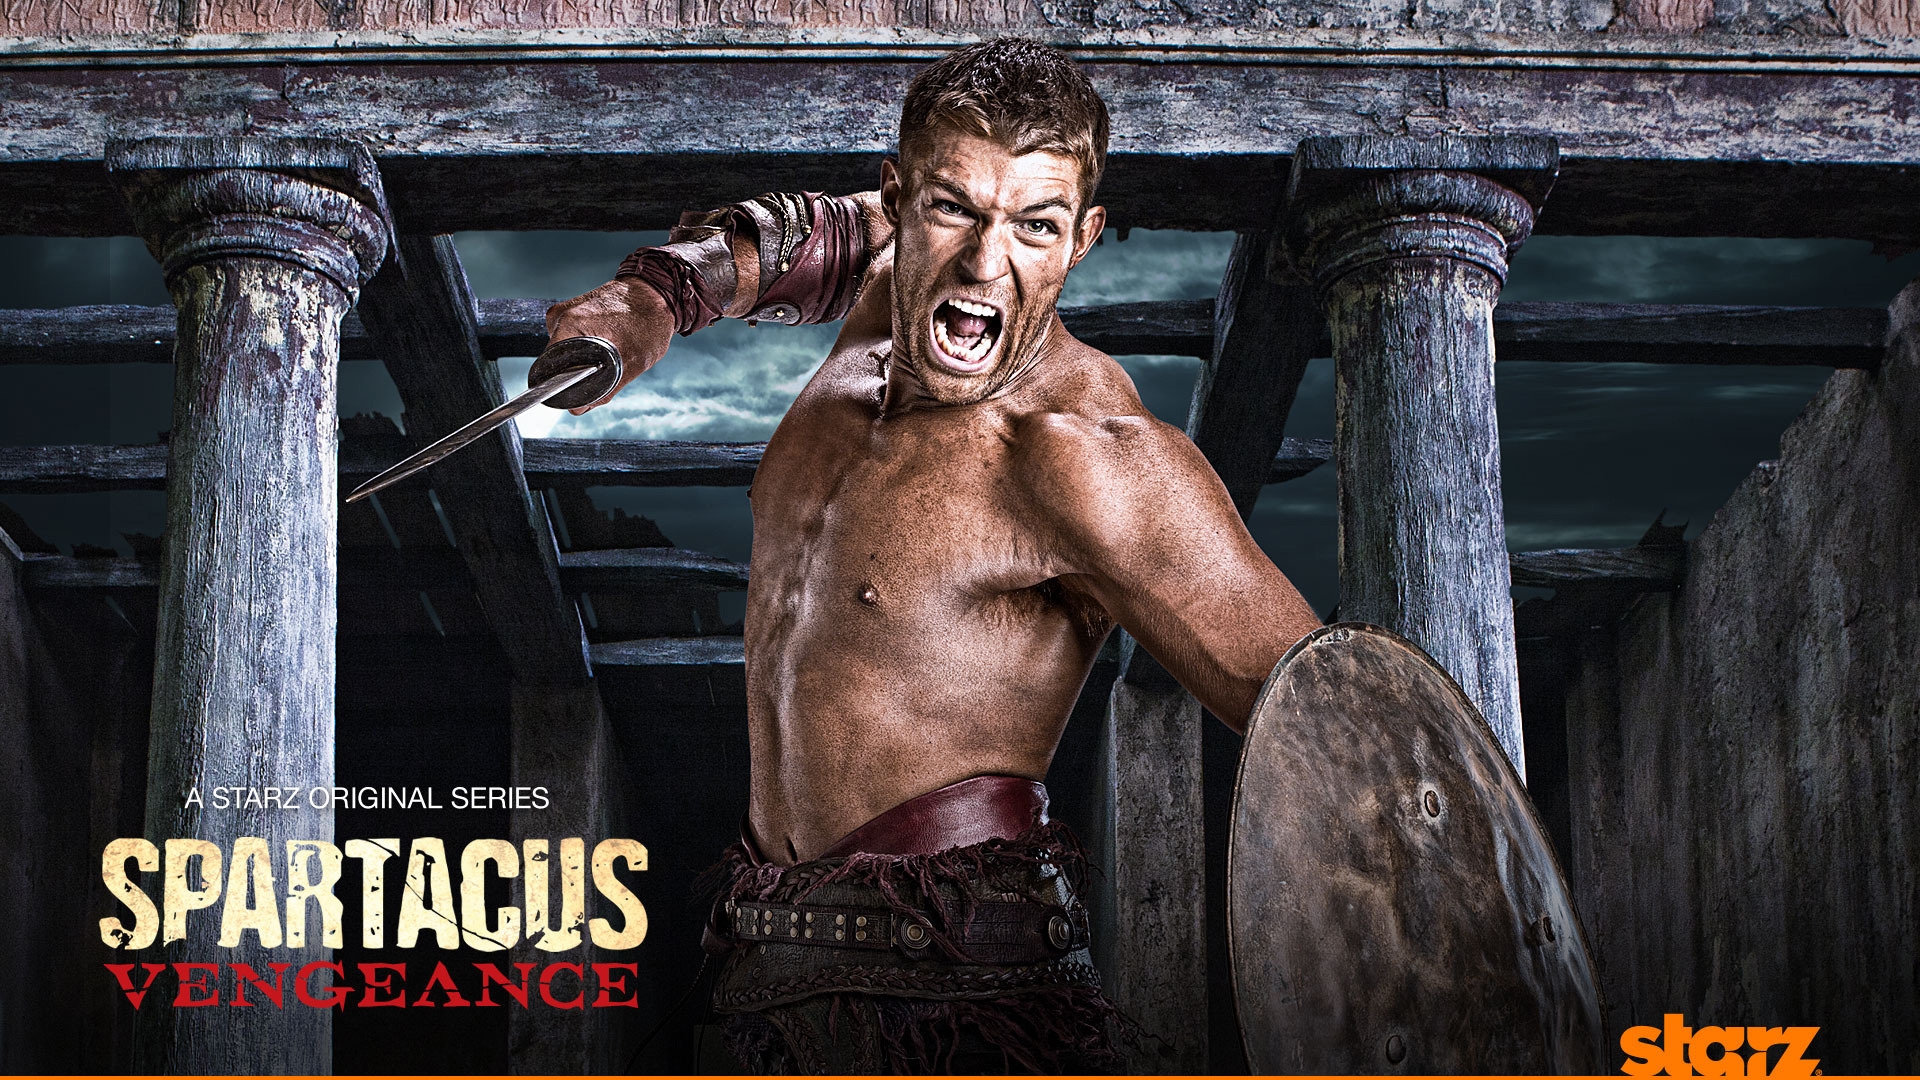 Spartacus Vengeance for 1920 x 1080 HDTV 1080p resolution